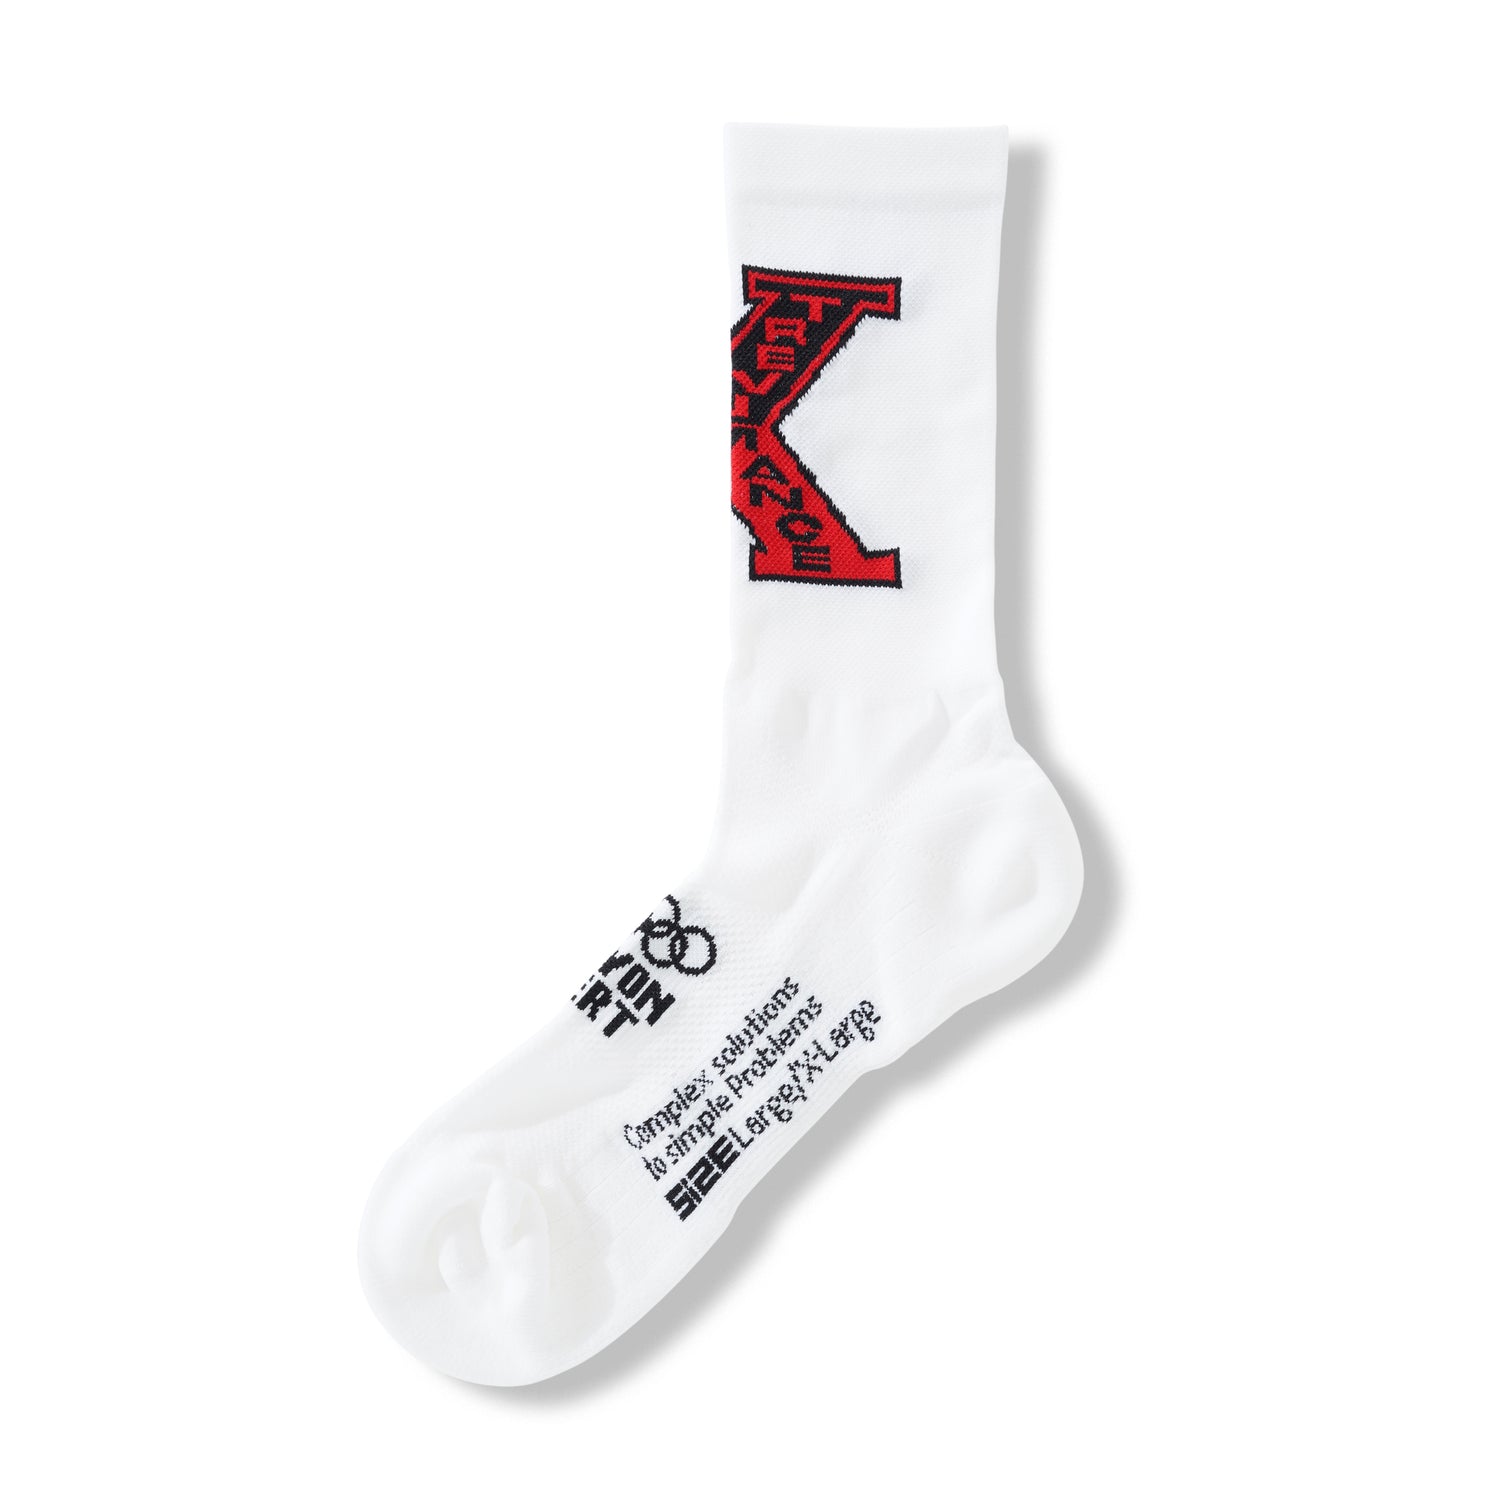 Xformance Socks, Ghost White